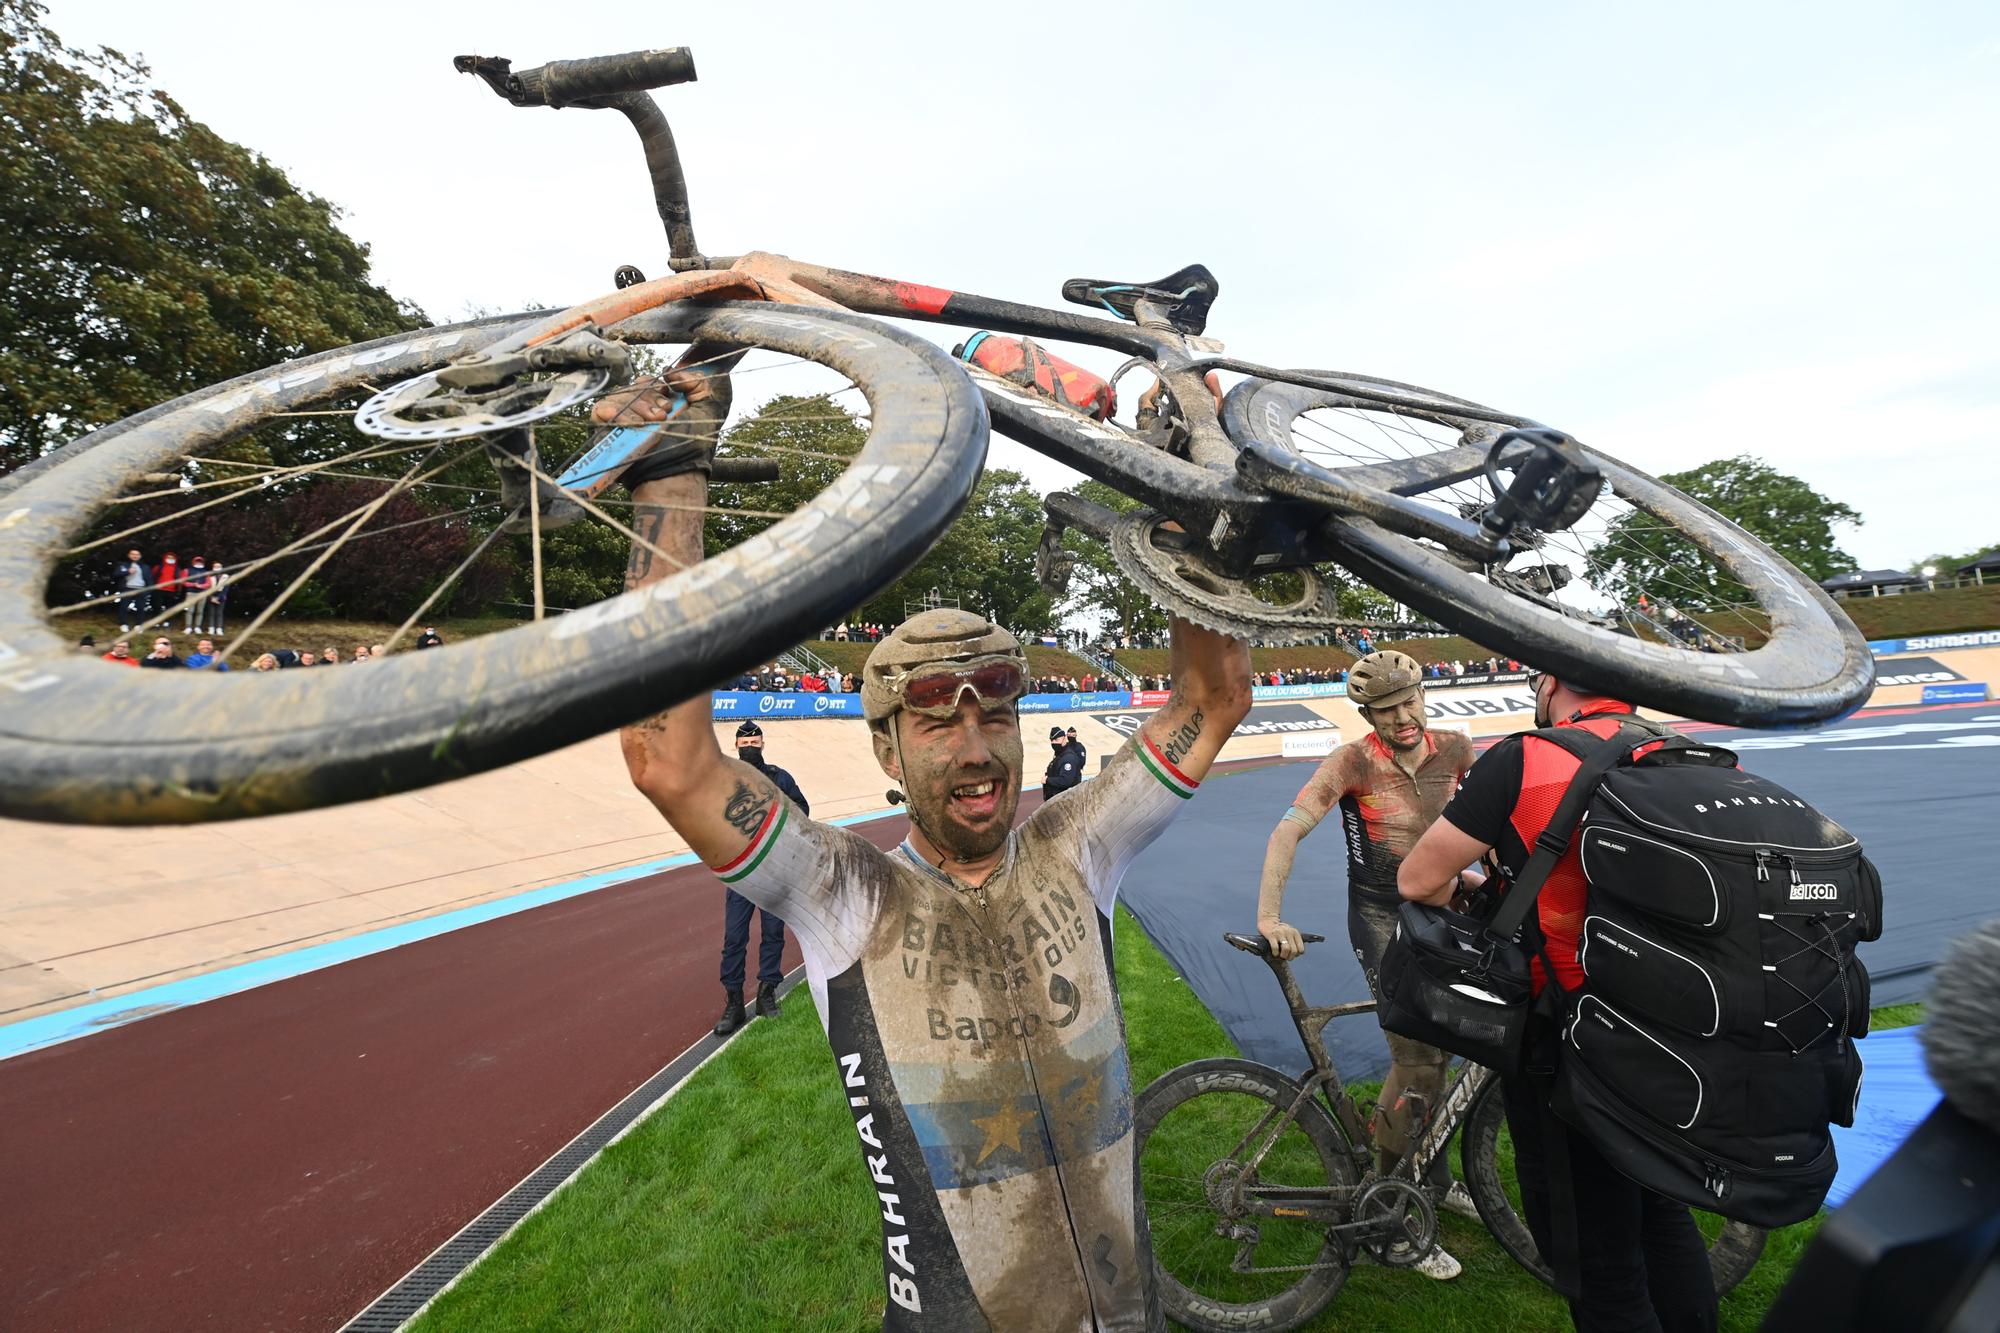 La épica victoria de Colbrelli en el barro de la París-Roubaix